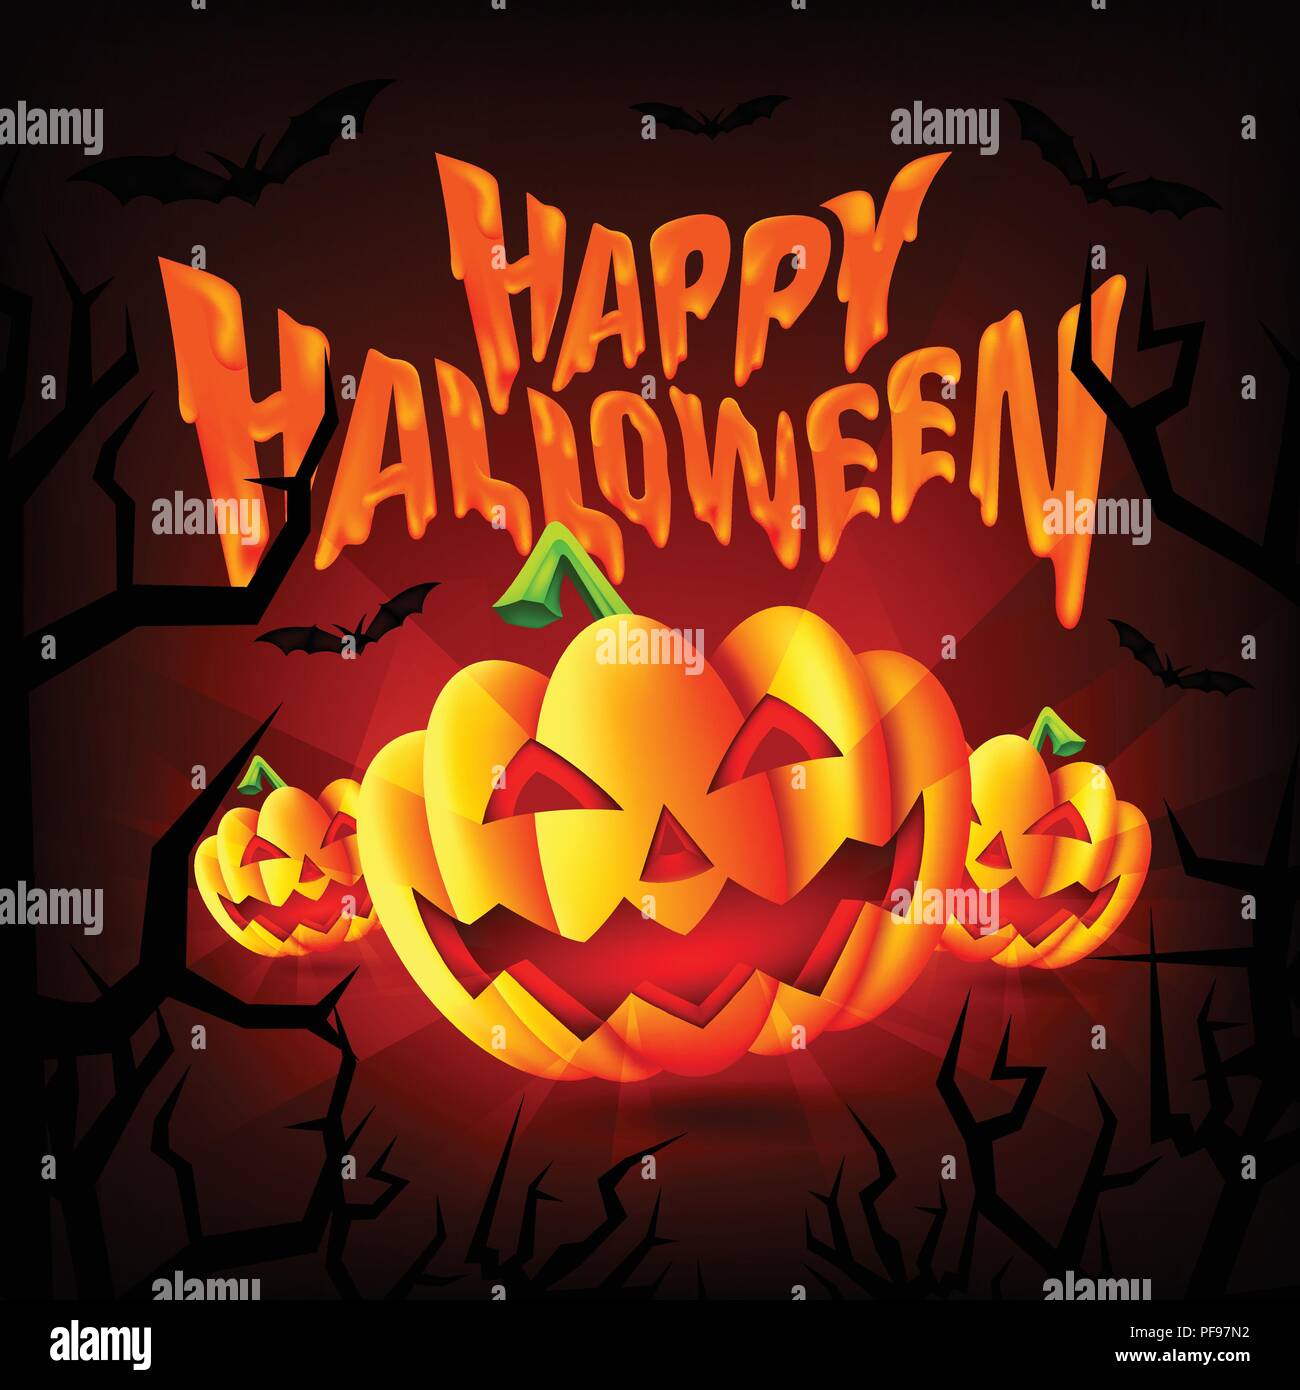 Happy Halloween, Halloween, Three Spooky Pumpkins with Bats at midnight, Floating Pumpkins, Horror, Stock Vector